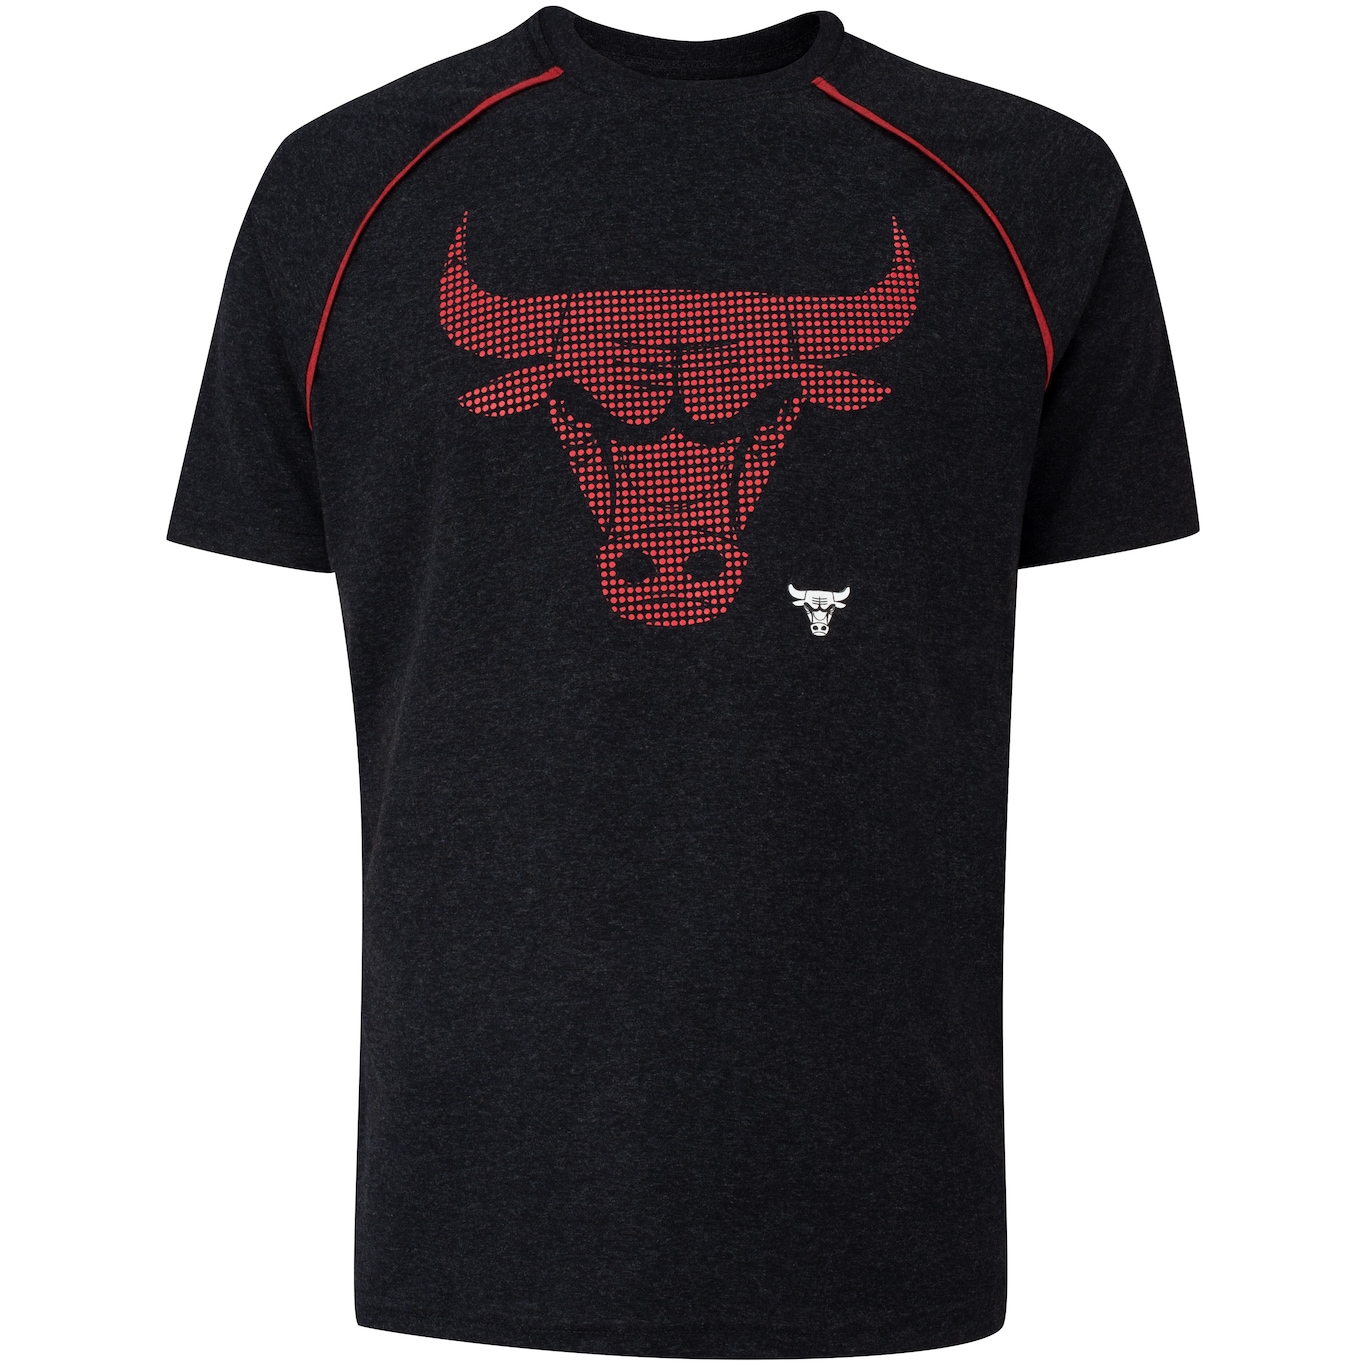 Camiseta Chicago Bulls NBA